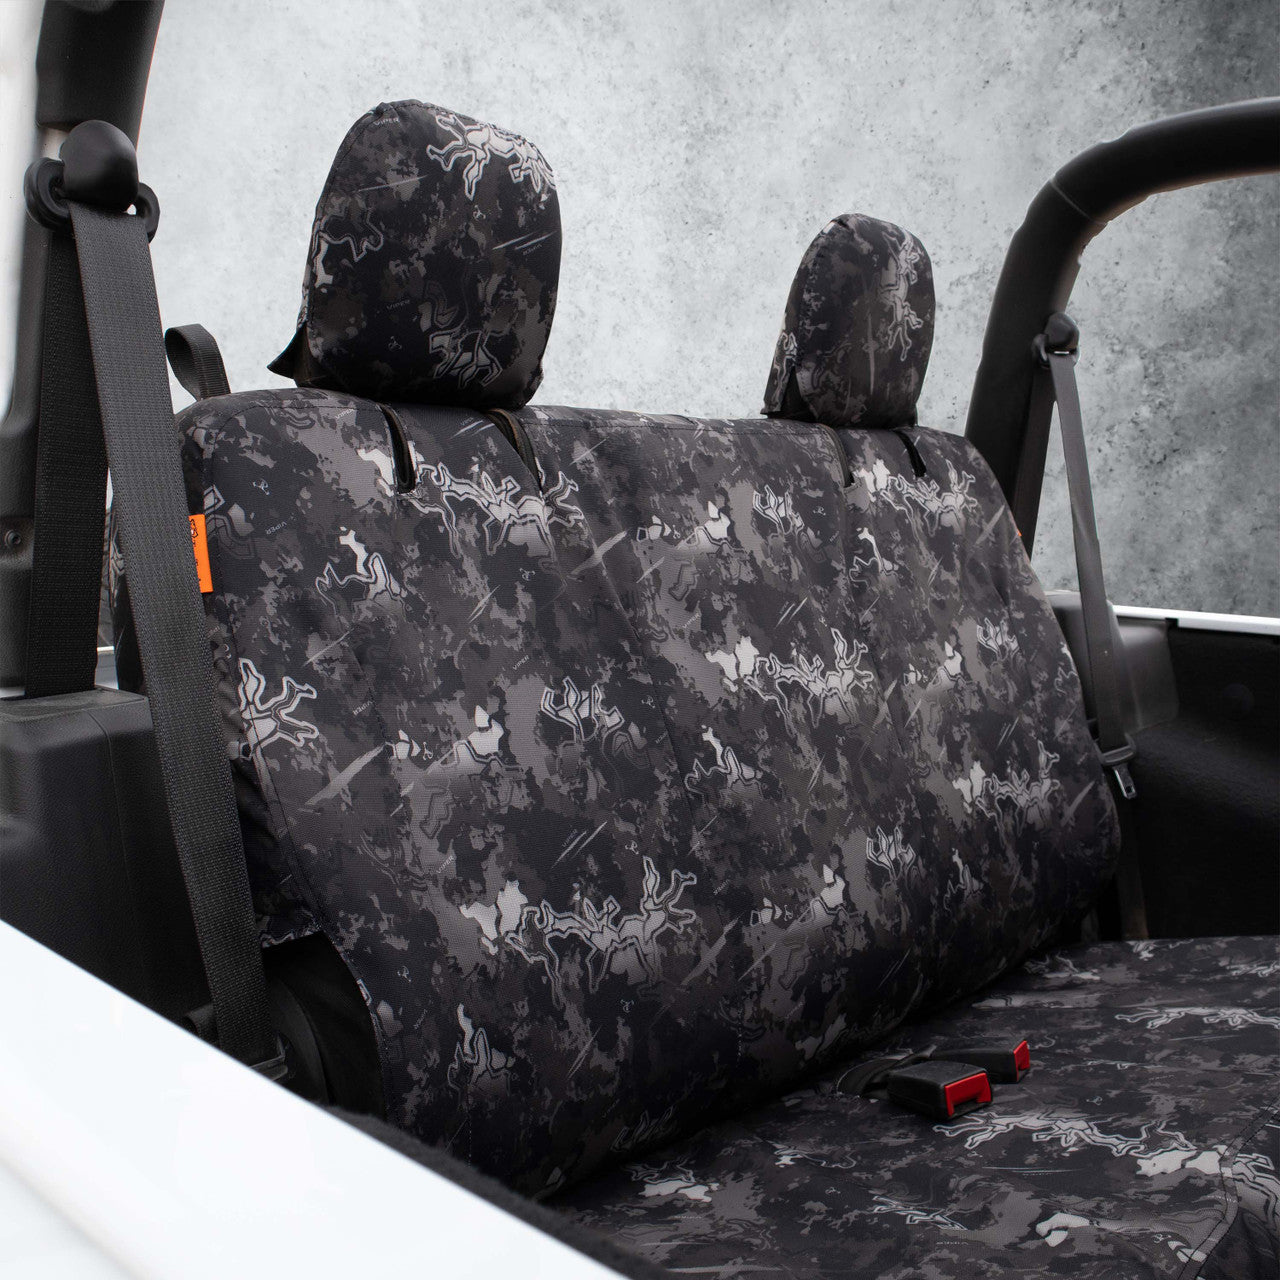 Jeep Wrangler rear seat with TigerTough seat covers in TrueTimber Urban Viper Camo.